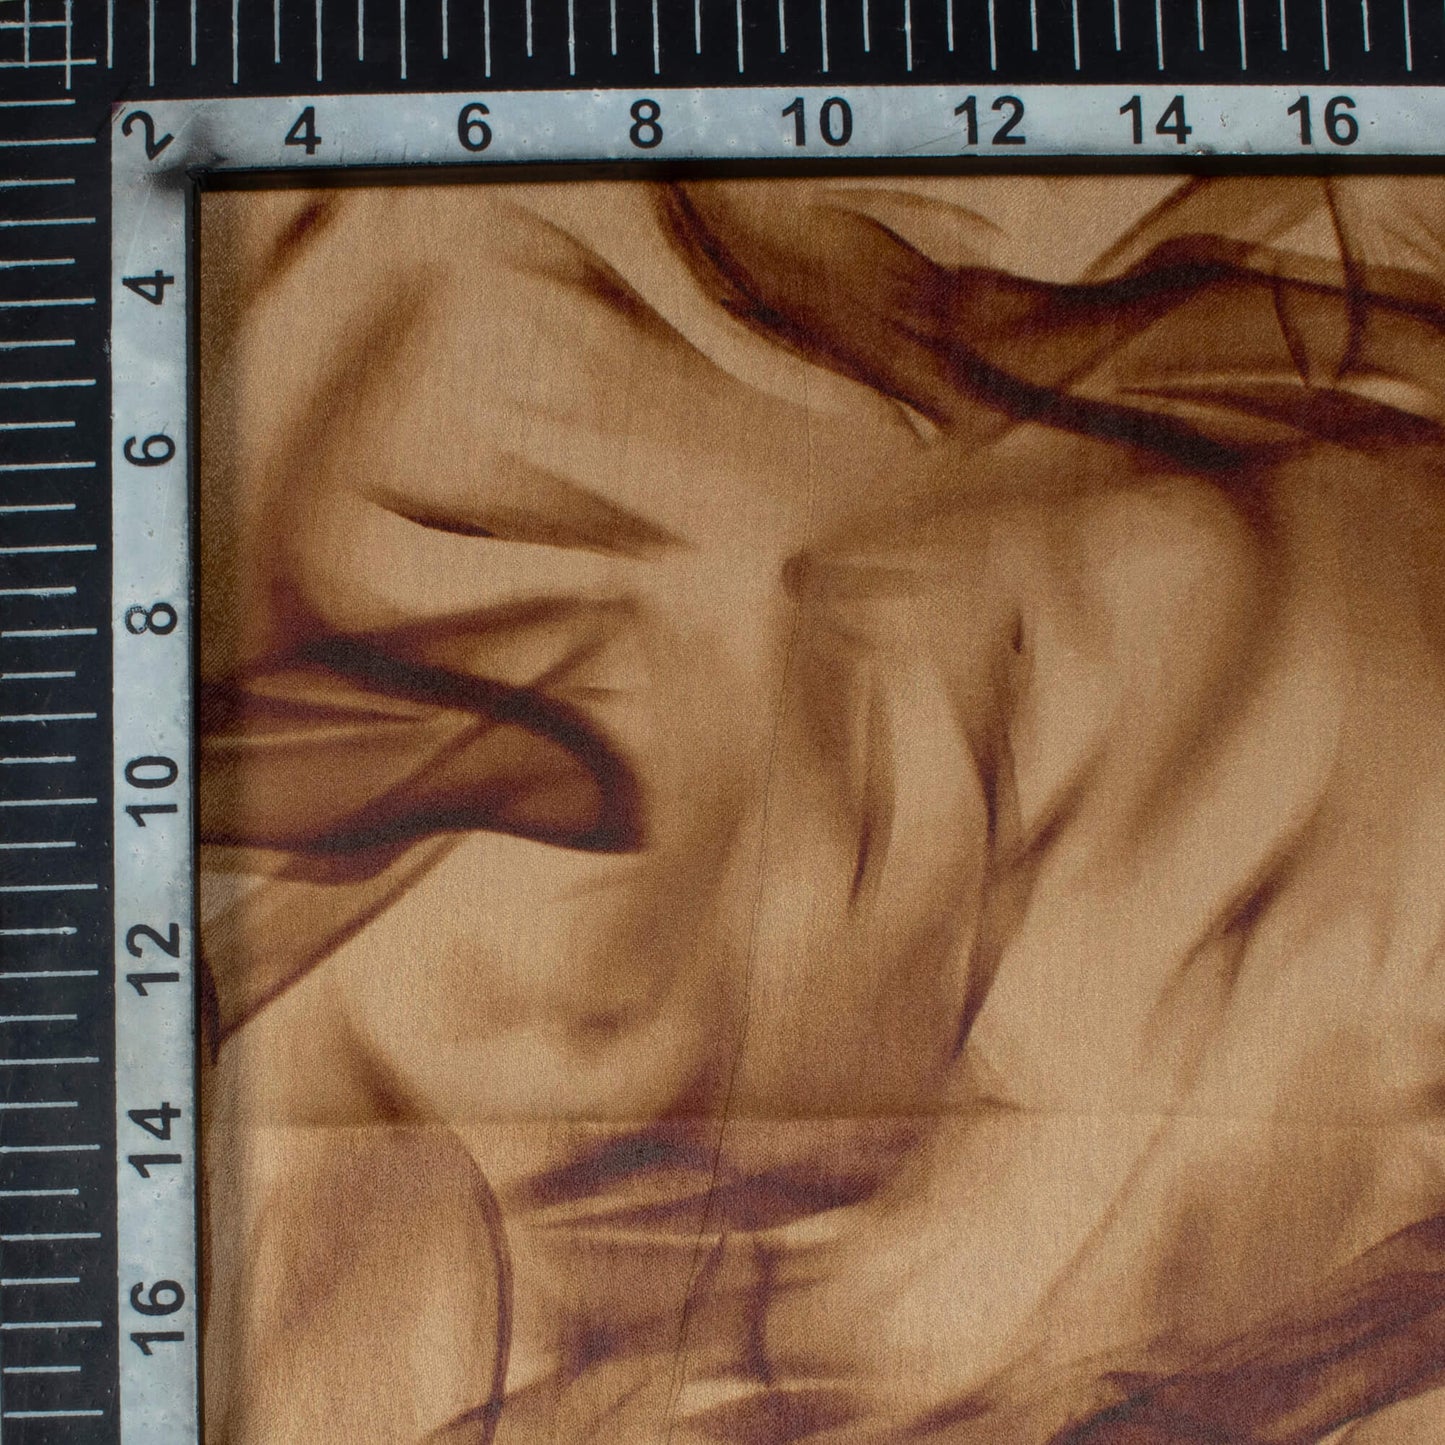 Coffee Brown Marble Pattern Digital Print Lush Satin Fabric